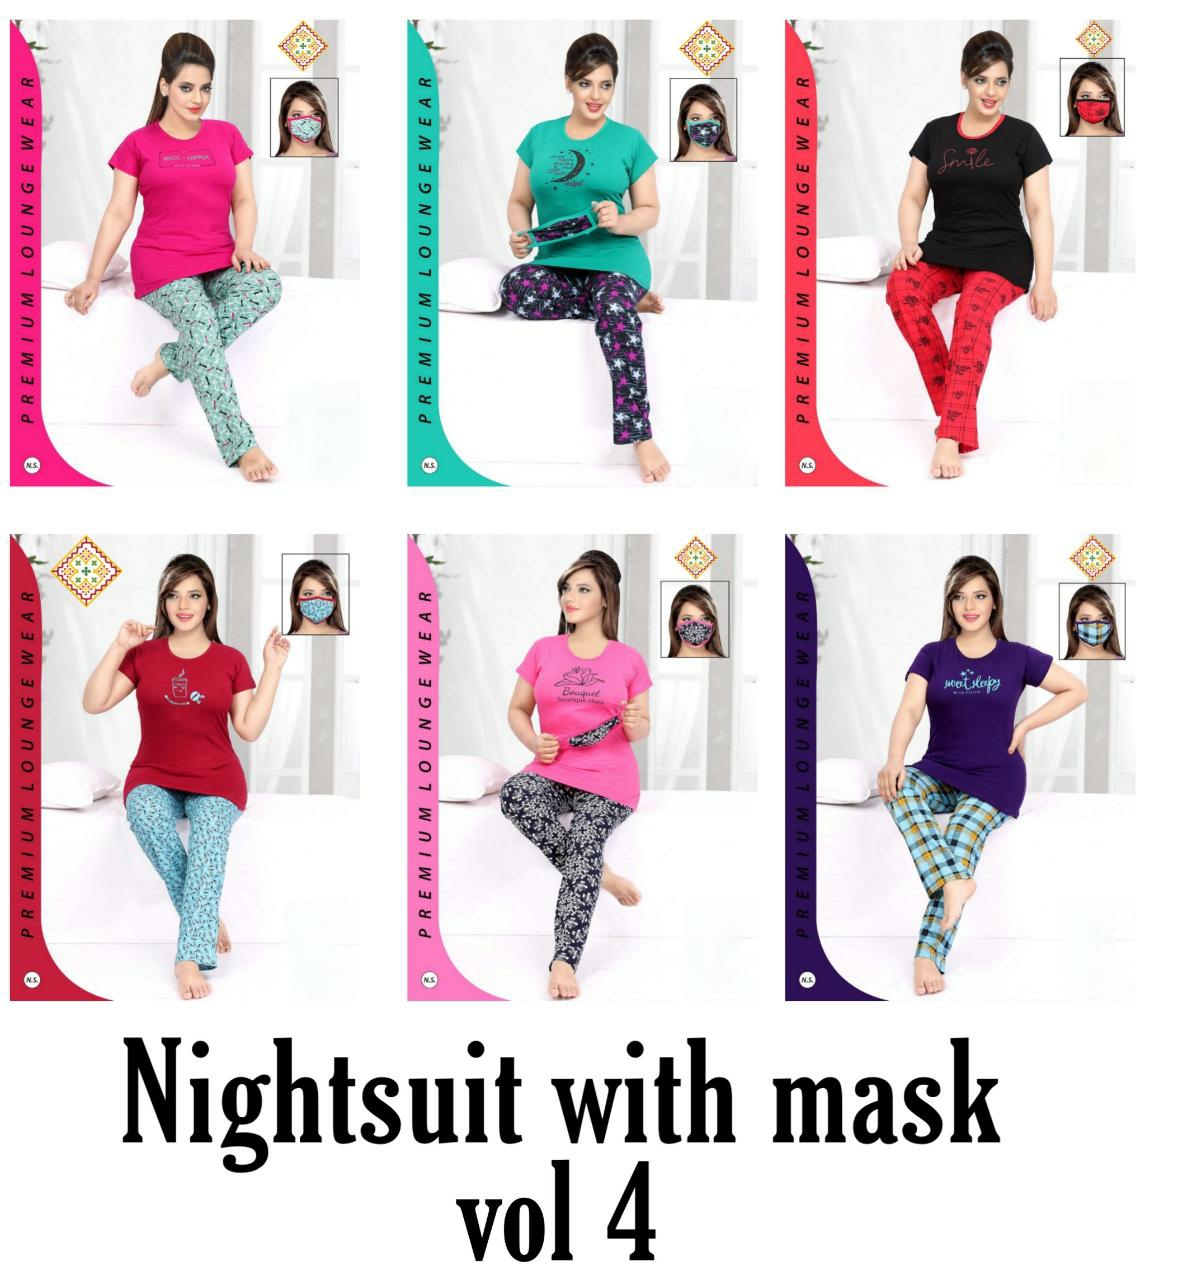 Gaabha nightsuit with mask vol 4 premium hosiery beautiful colours night wear catalog